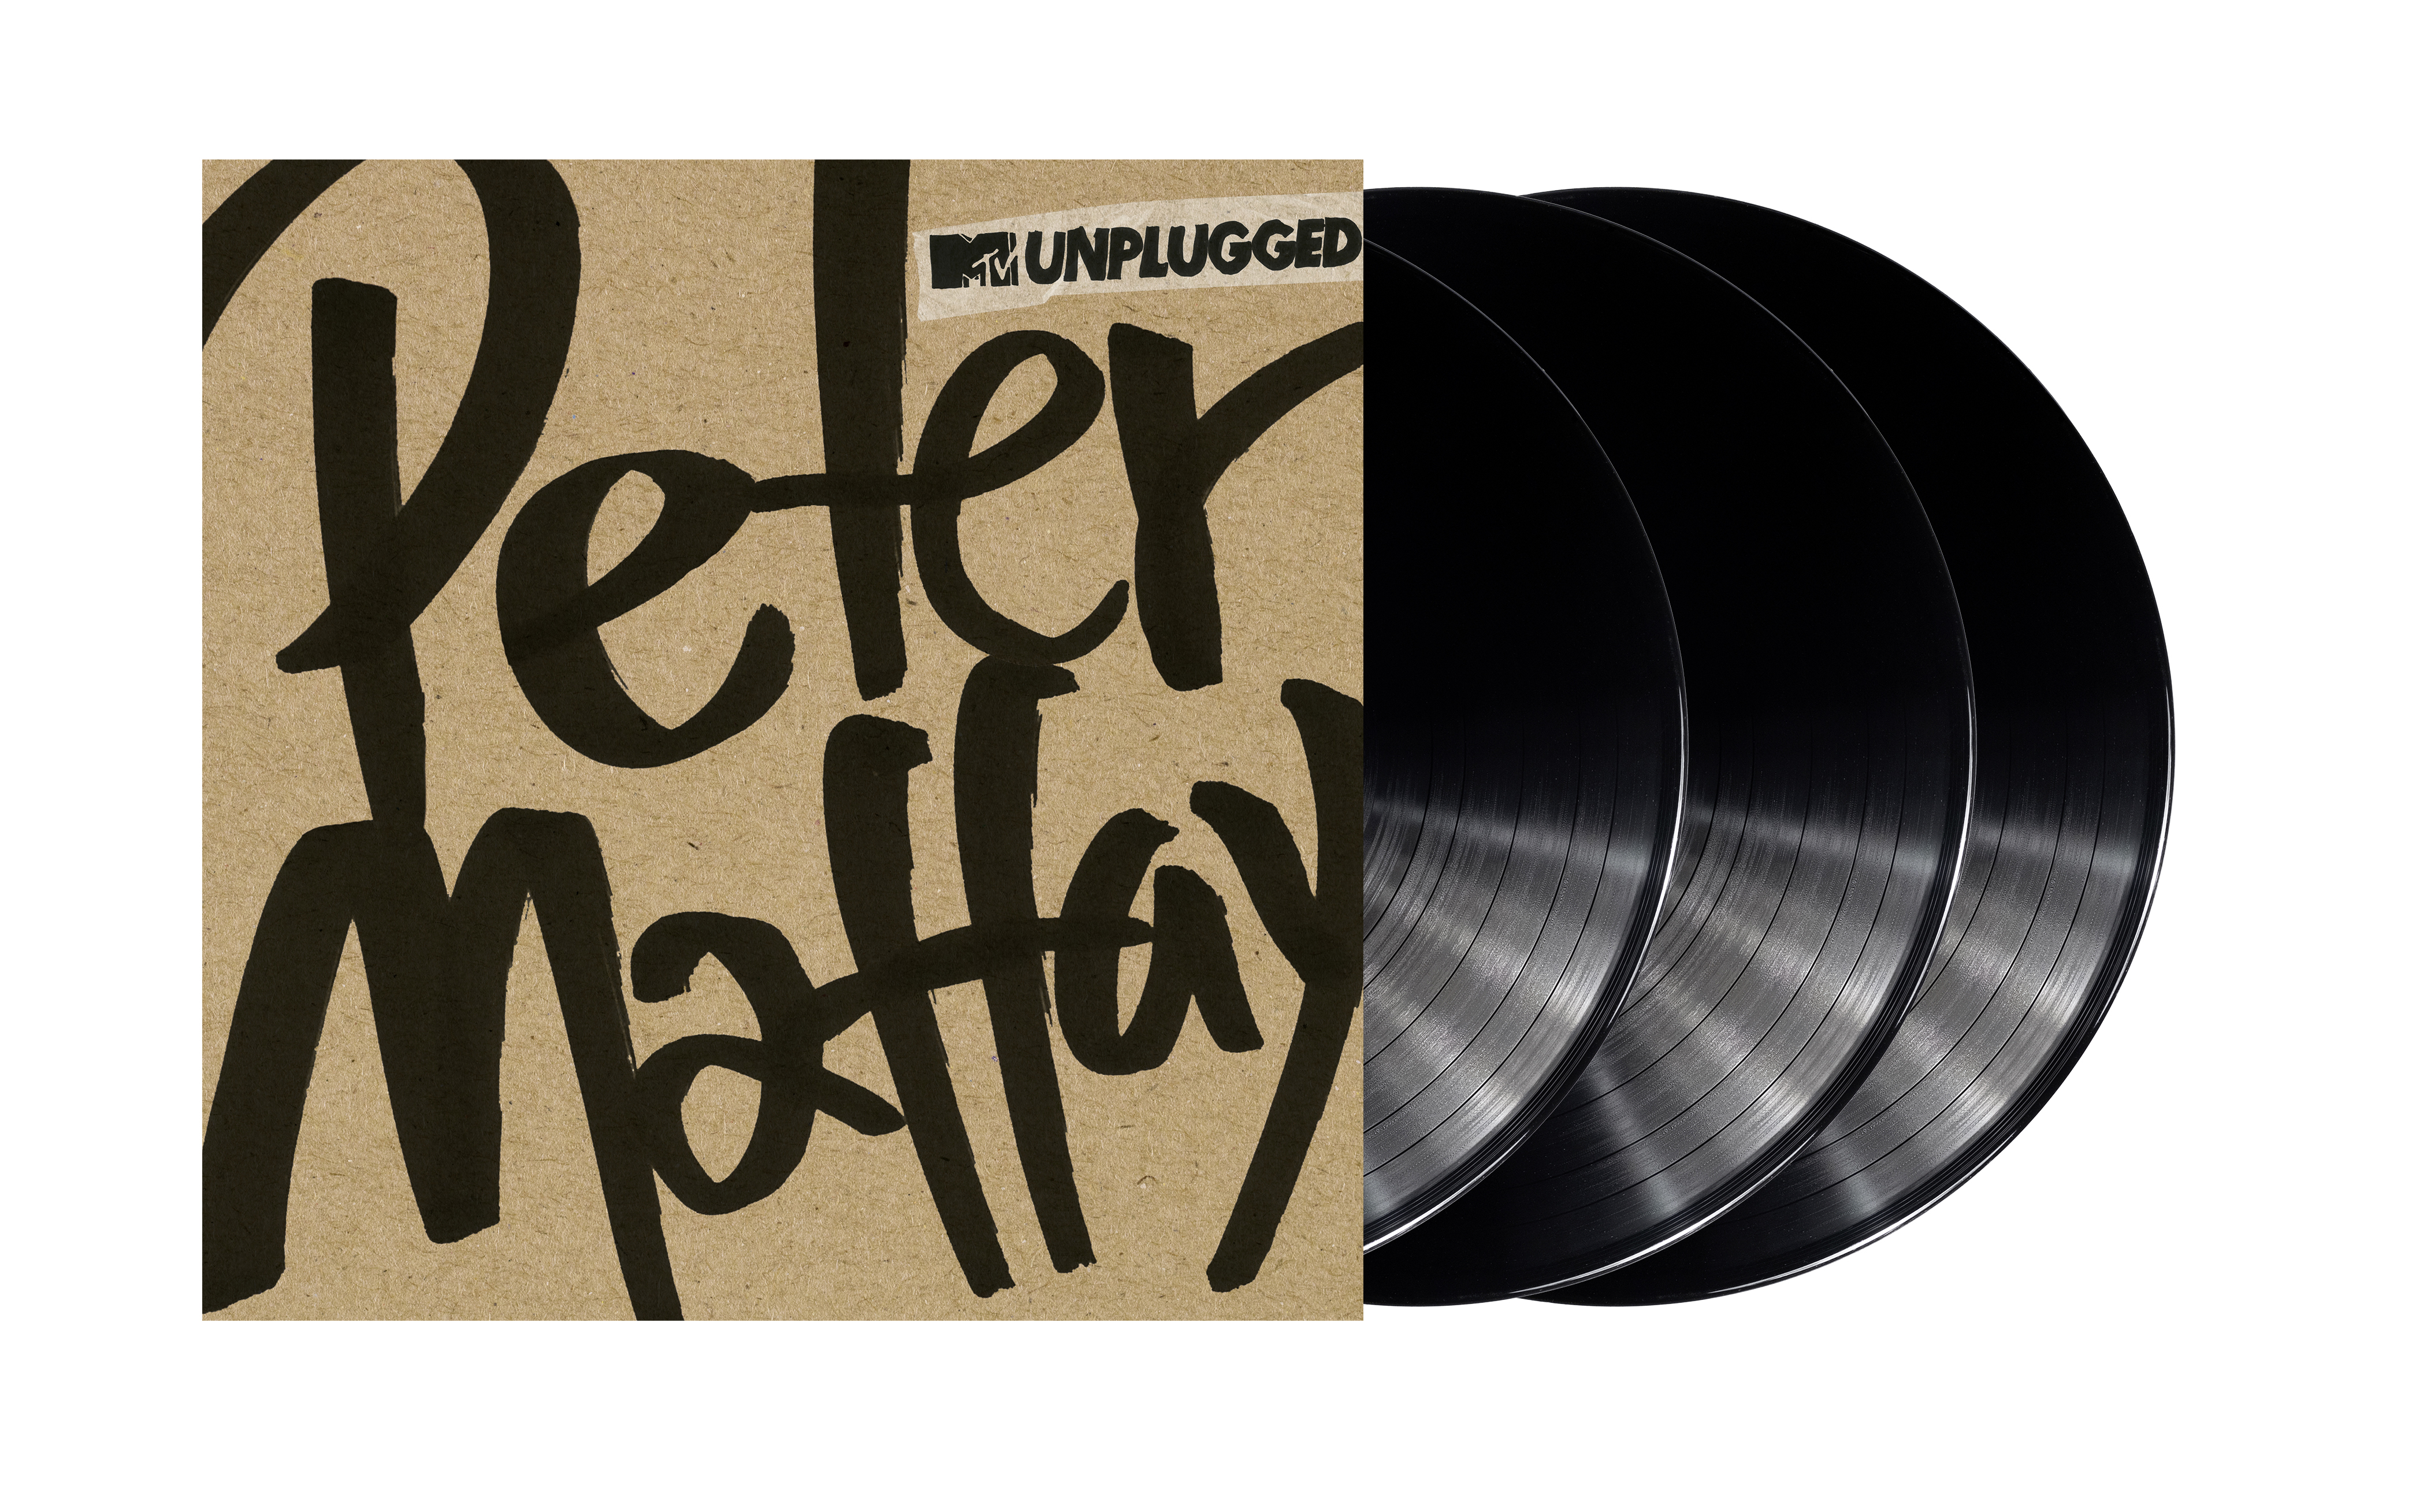 MTV Peter - (Vinyl) - Unplugged Maffay